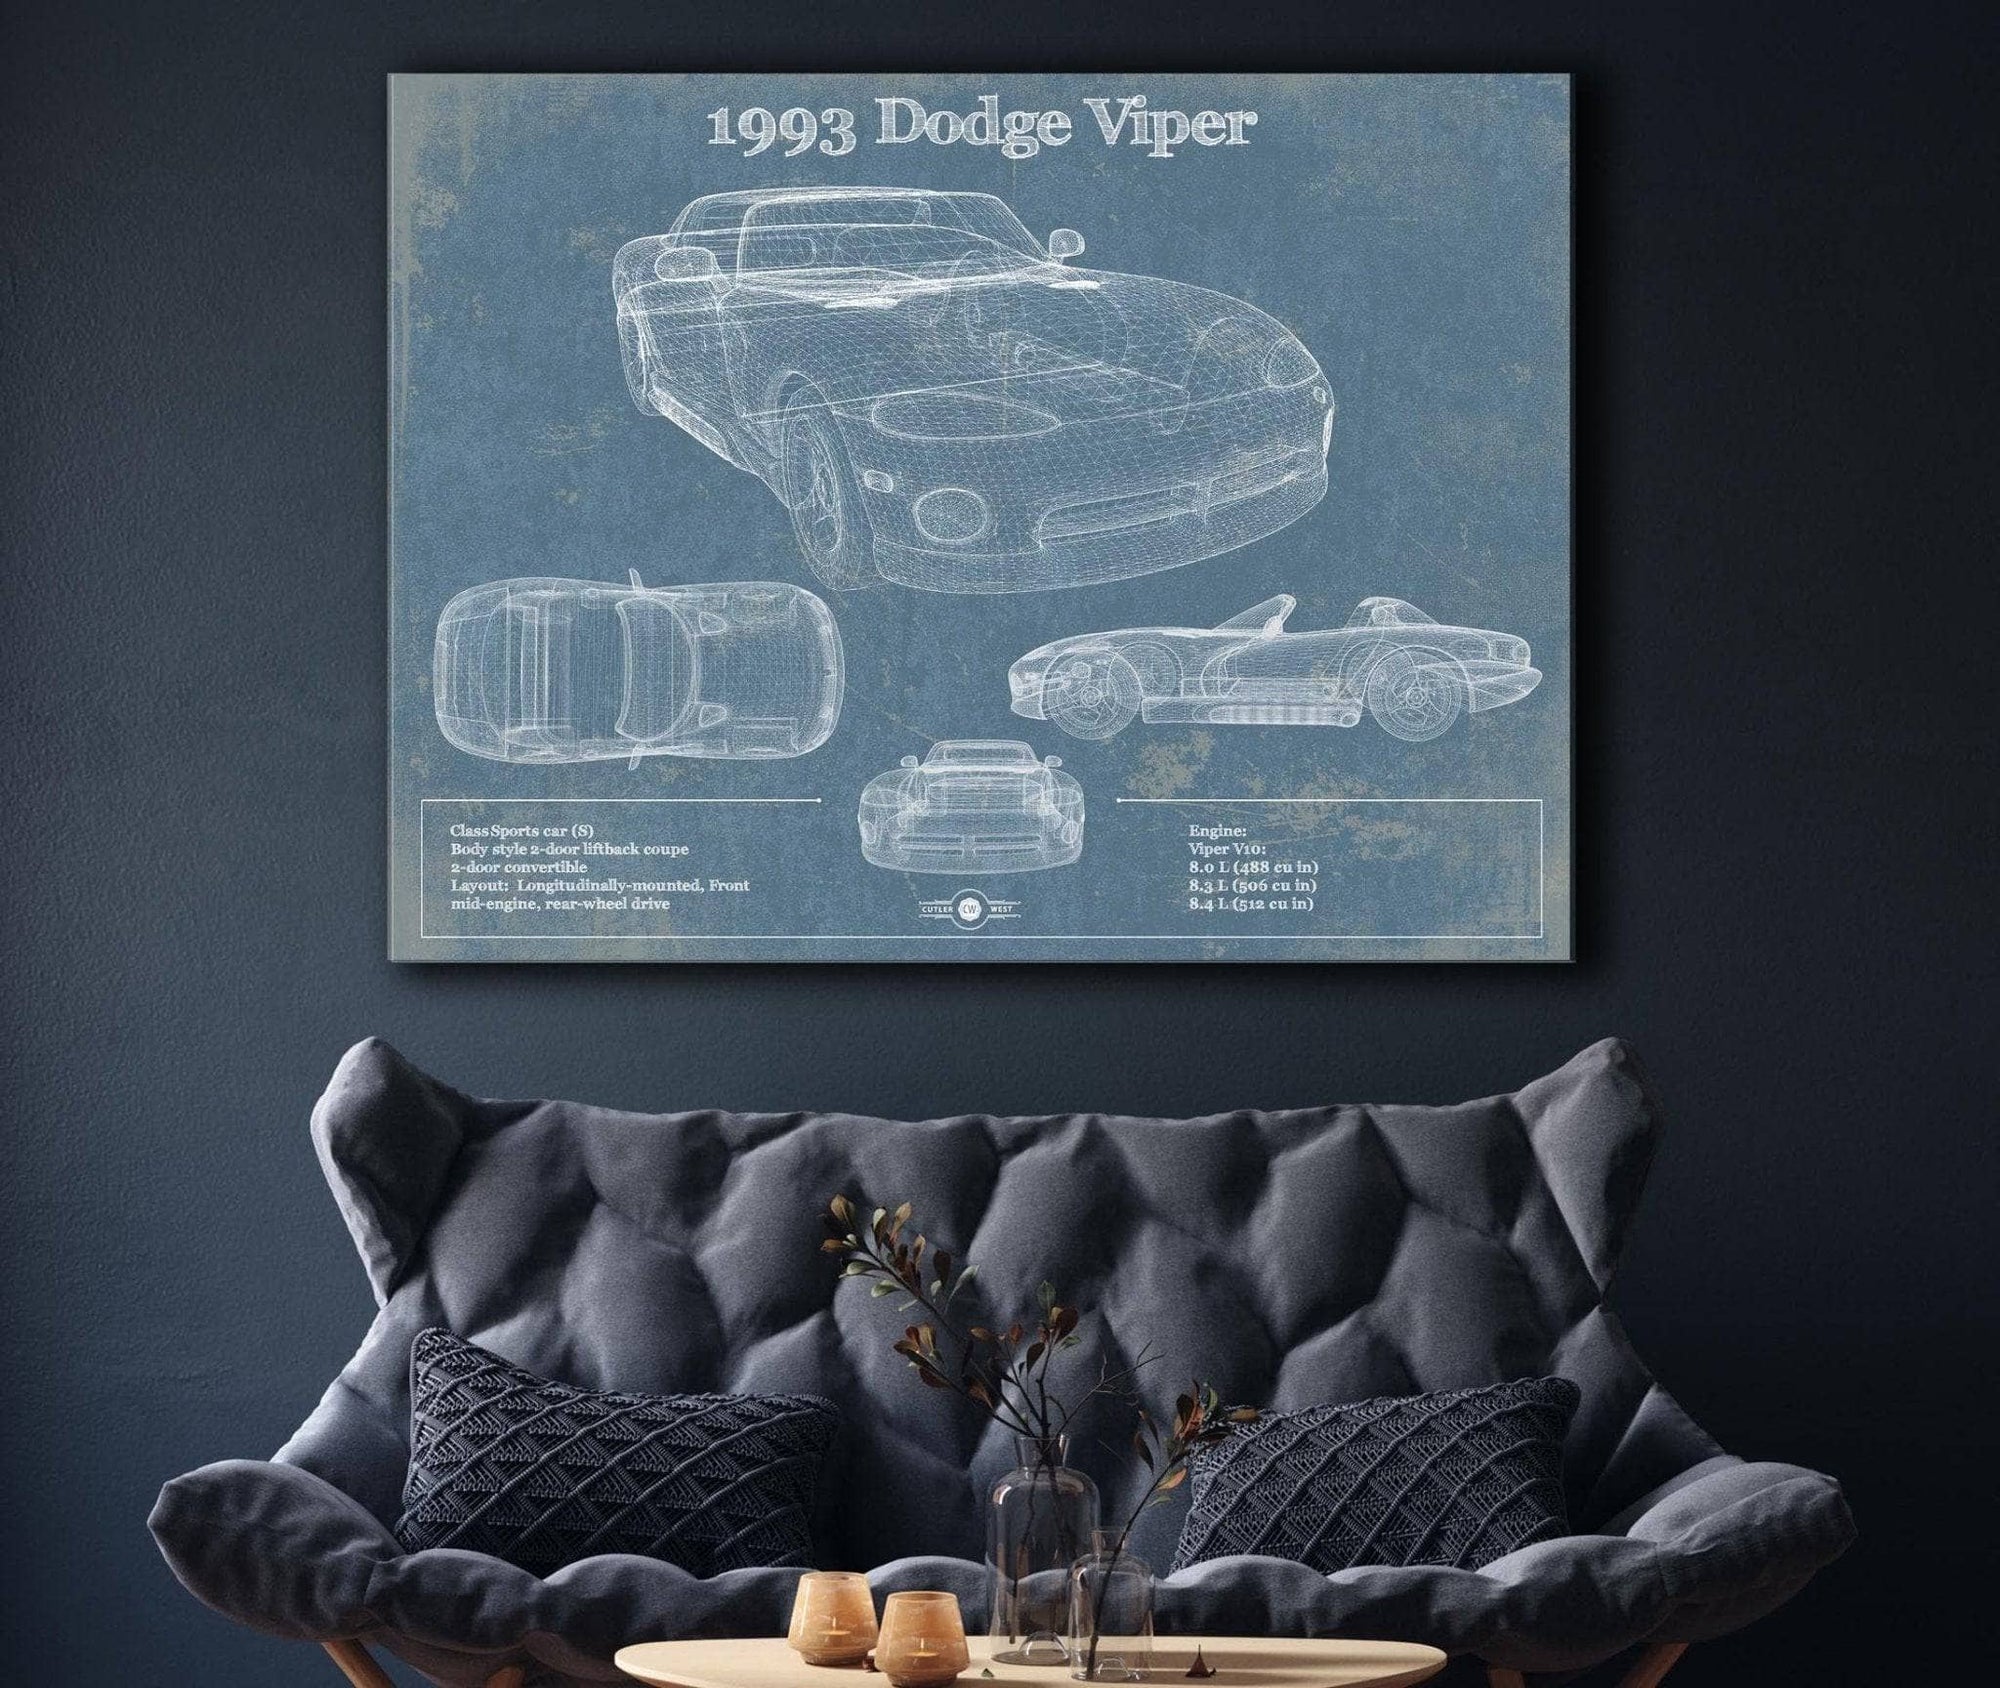 Cutler West Dodge Collection 1993 Dodge Viper Vintage Blueprint Auto Print